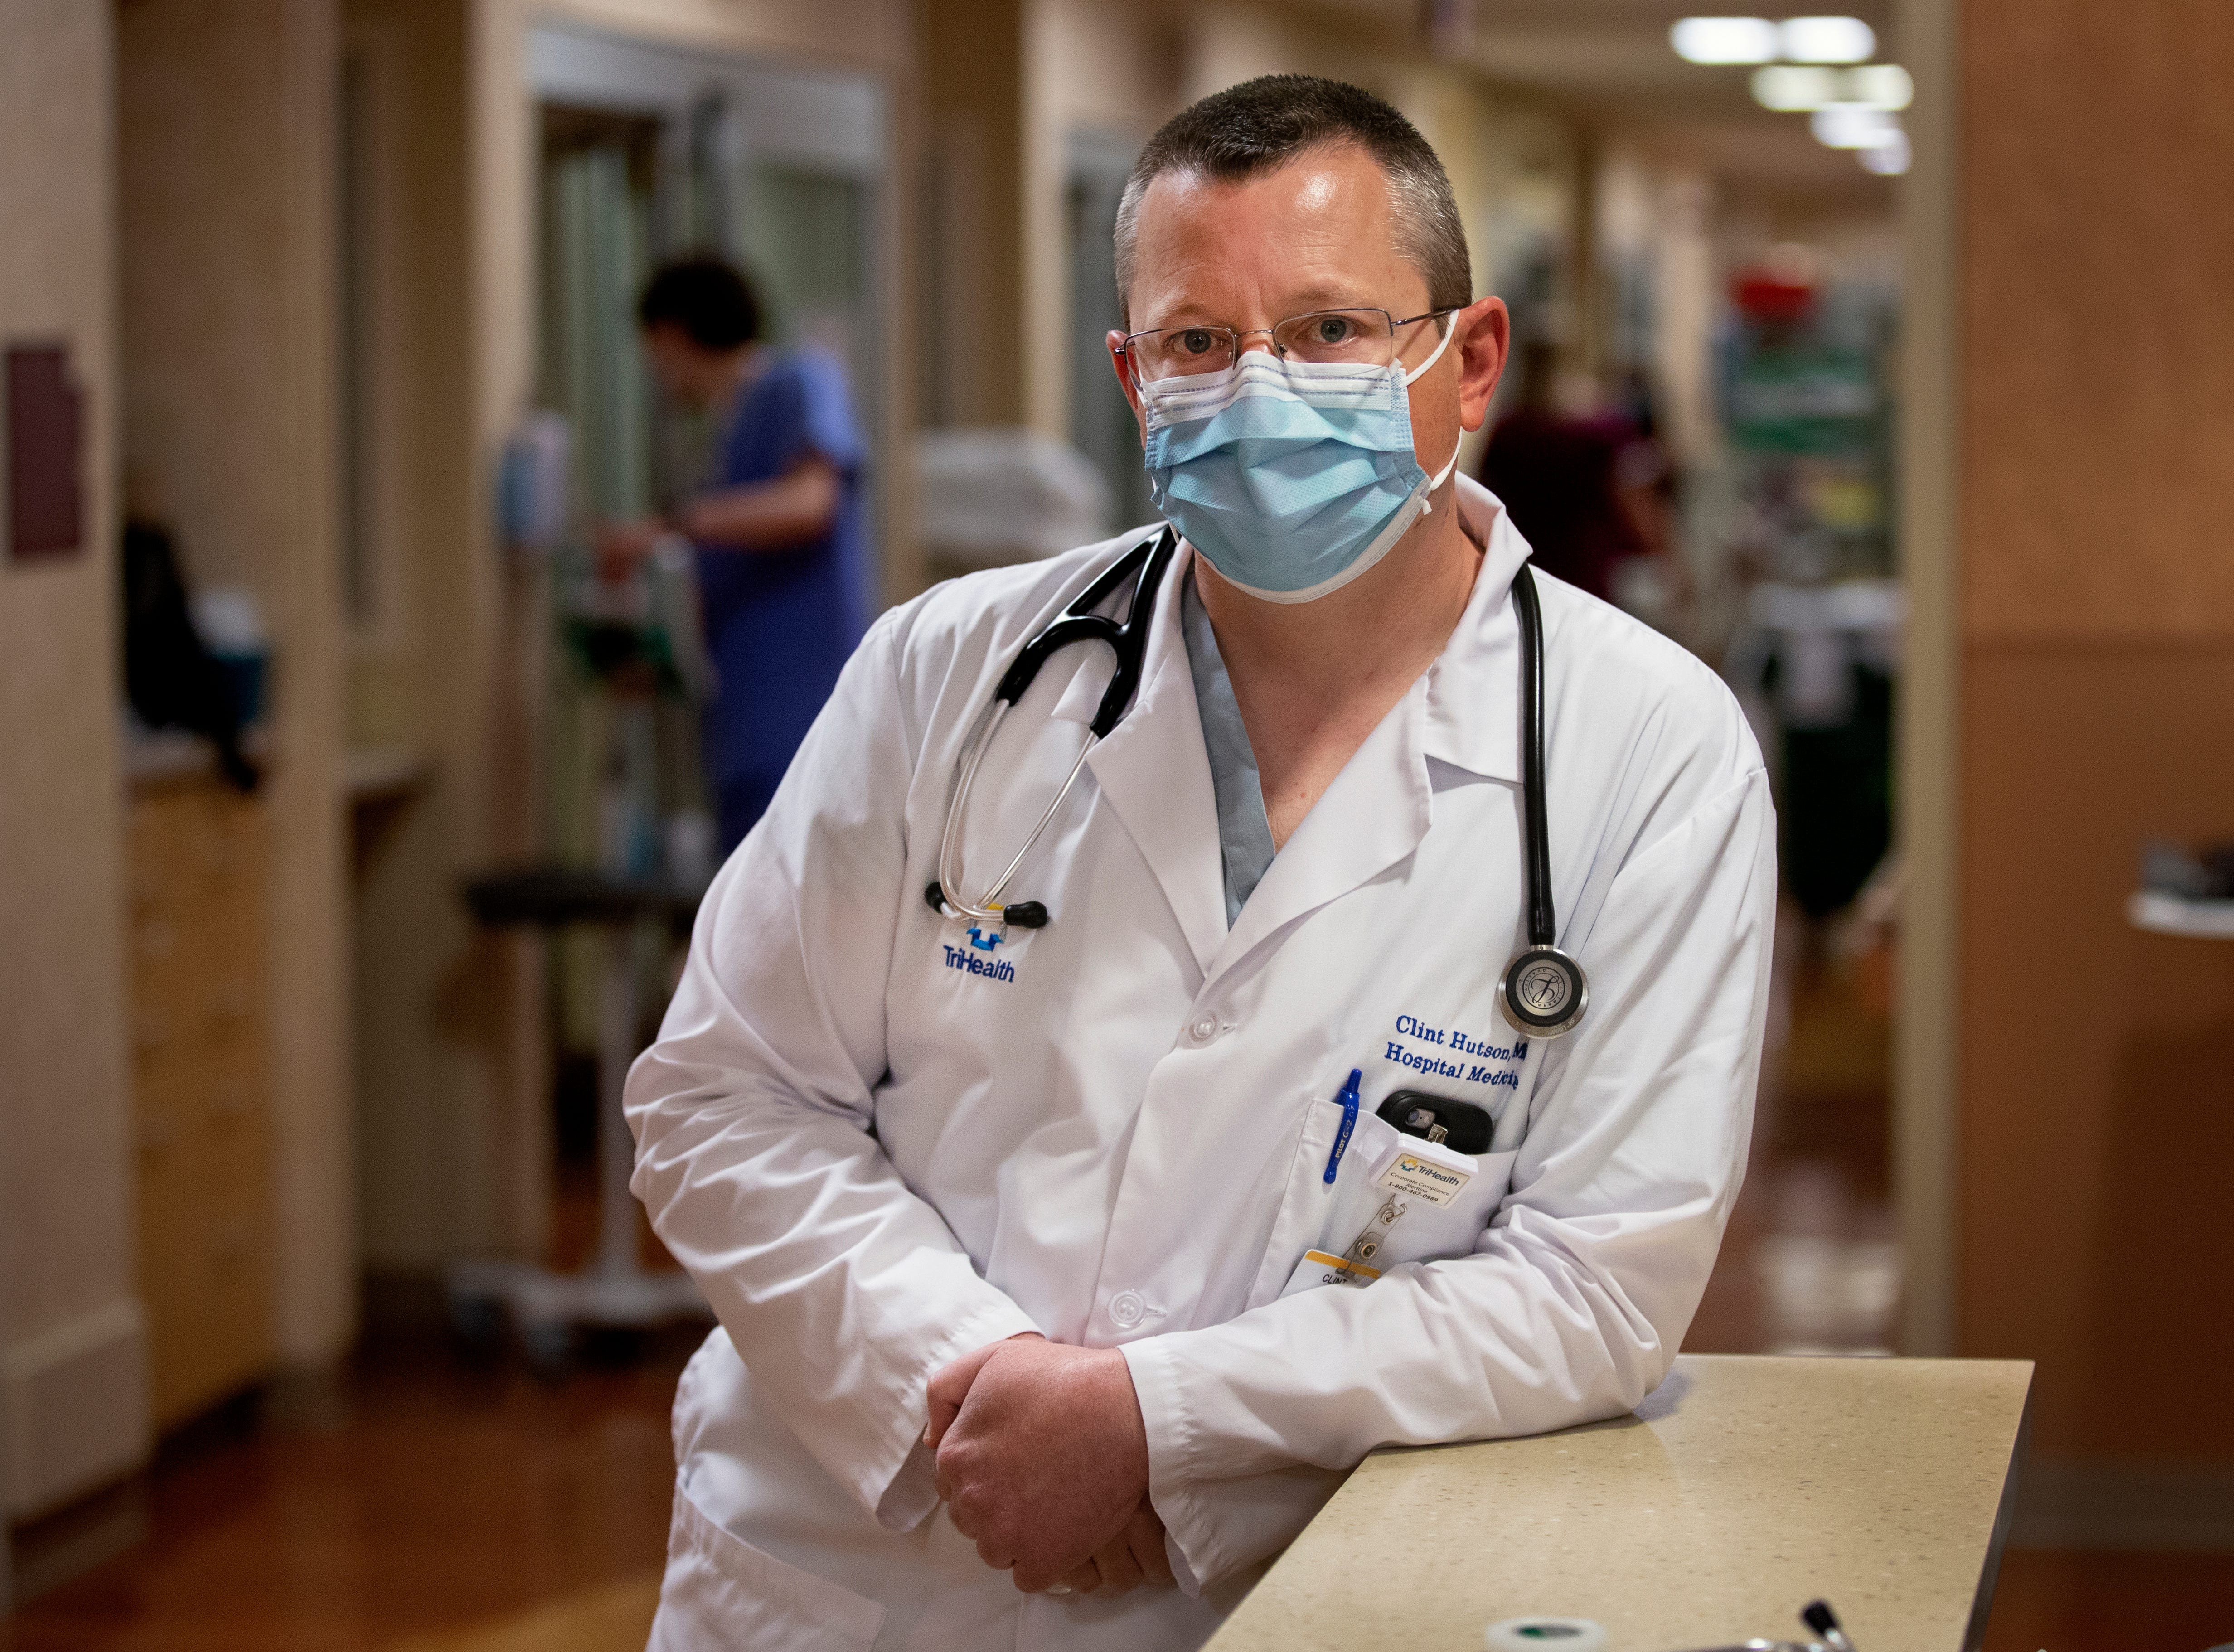 Dr. Clint Hutson, director of hospitalist at TriHealth Good Samaritan Hospital